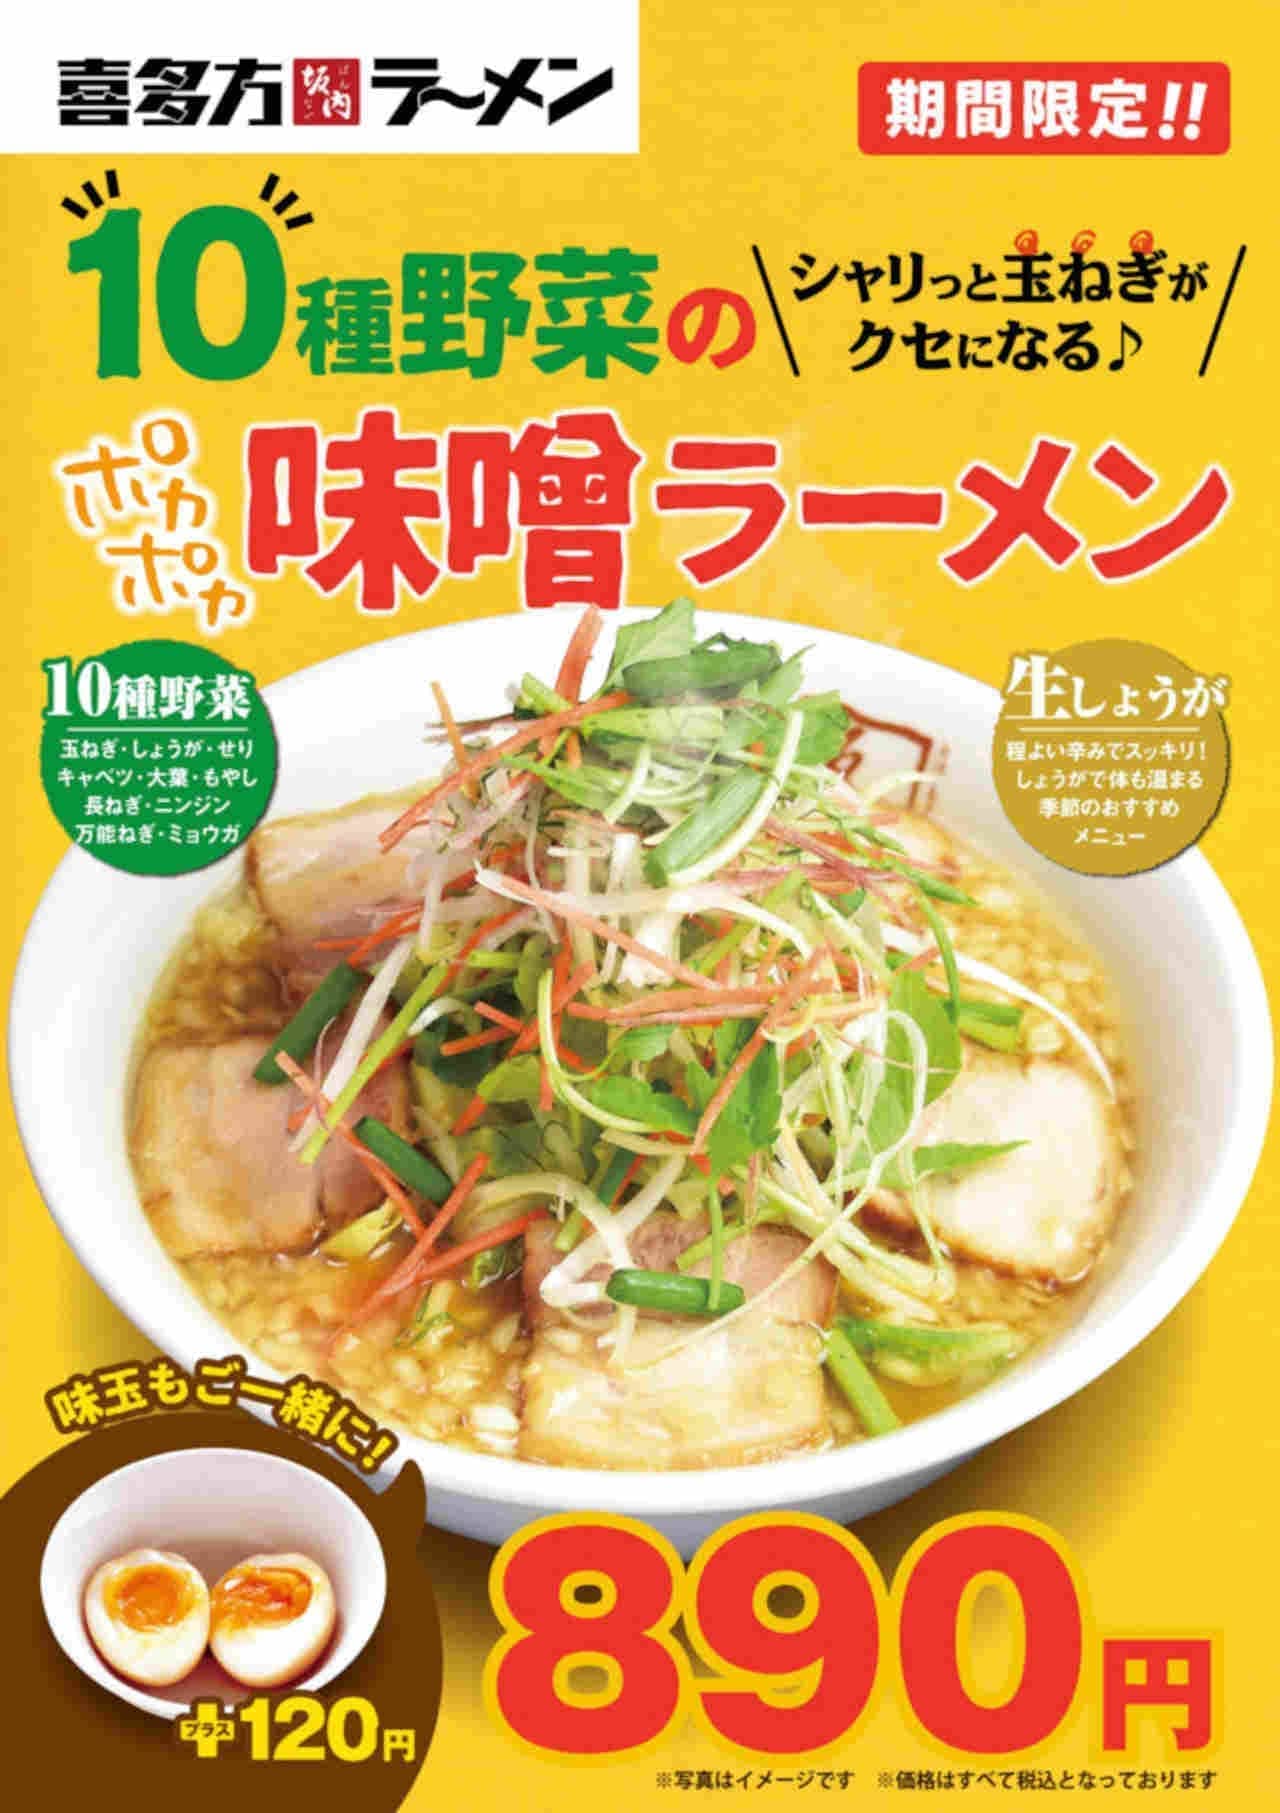 Kitakata Ramen Bannai "Poka Poka Miso Ramen with 10 kinds of vegetables